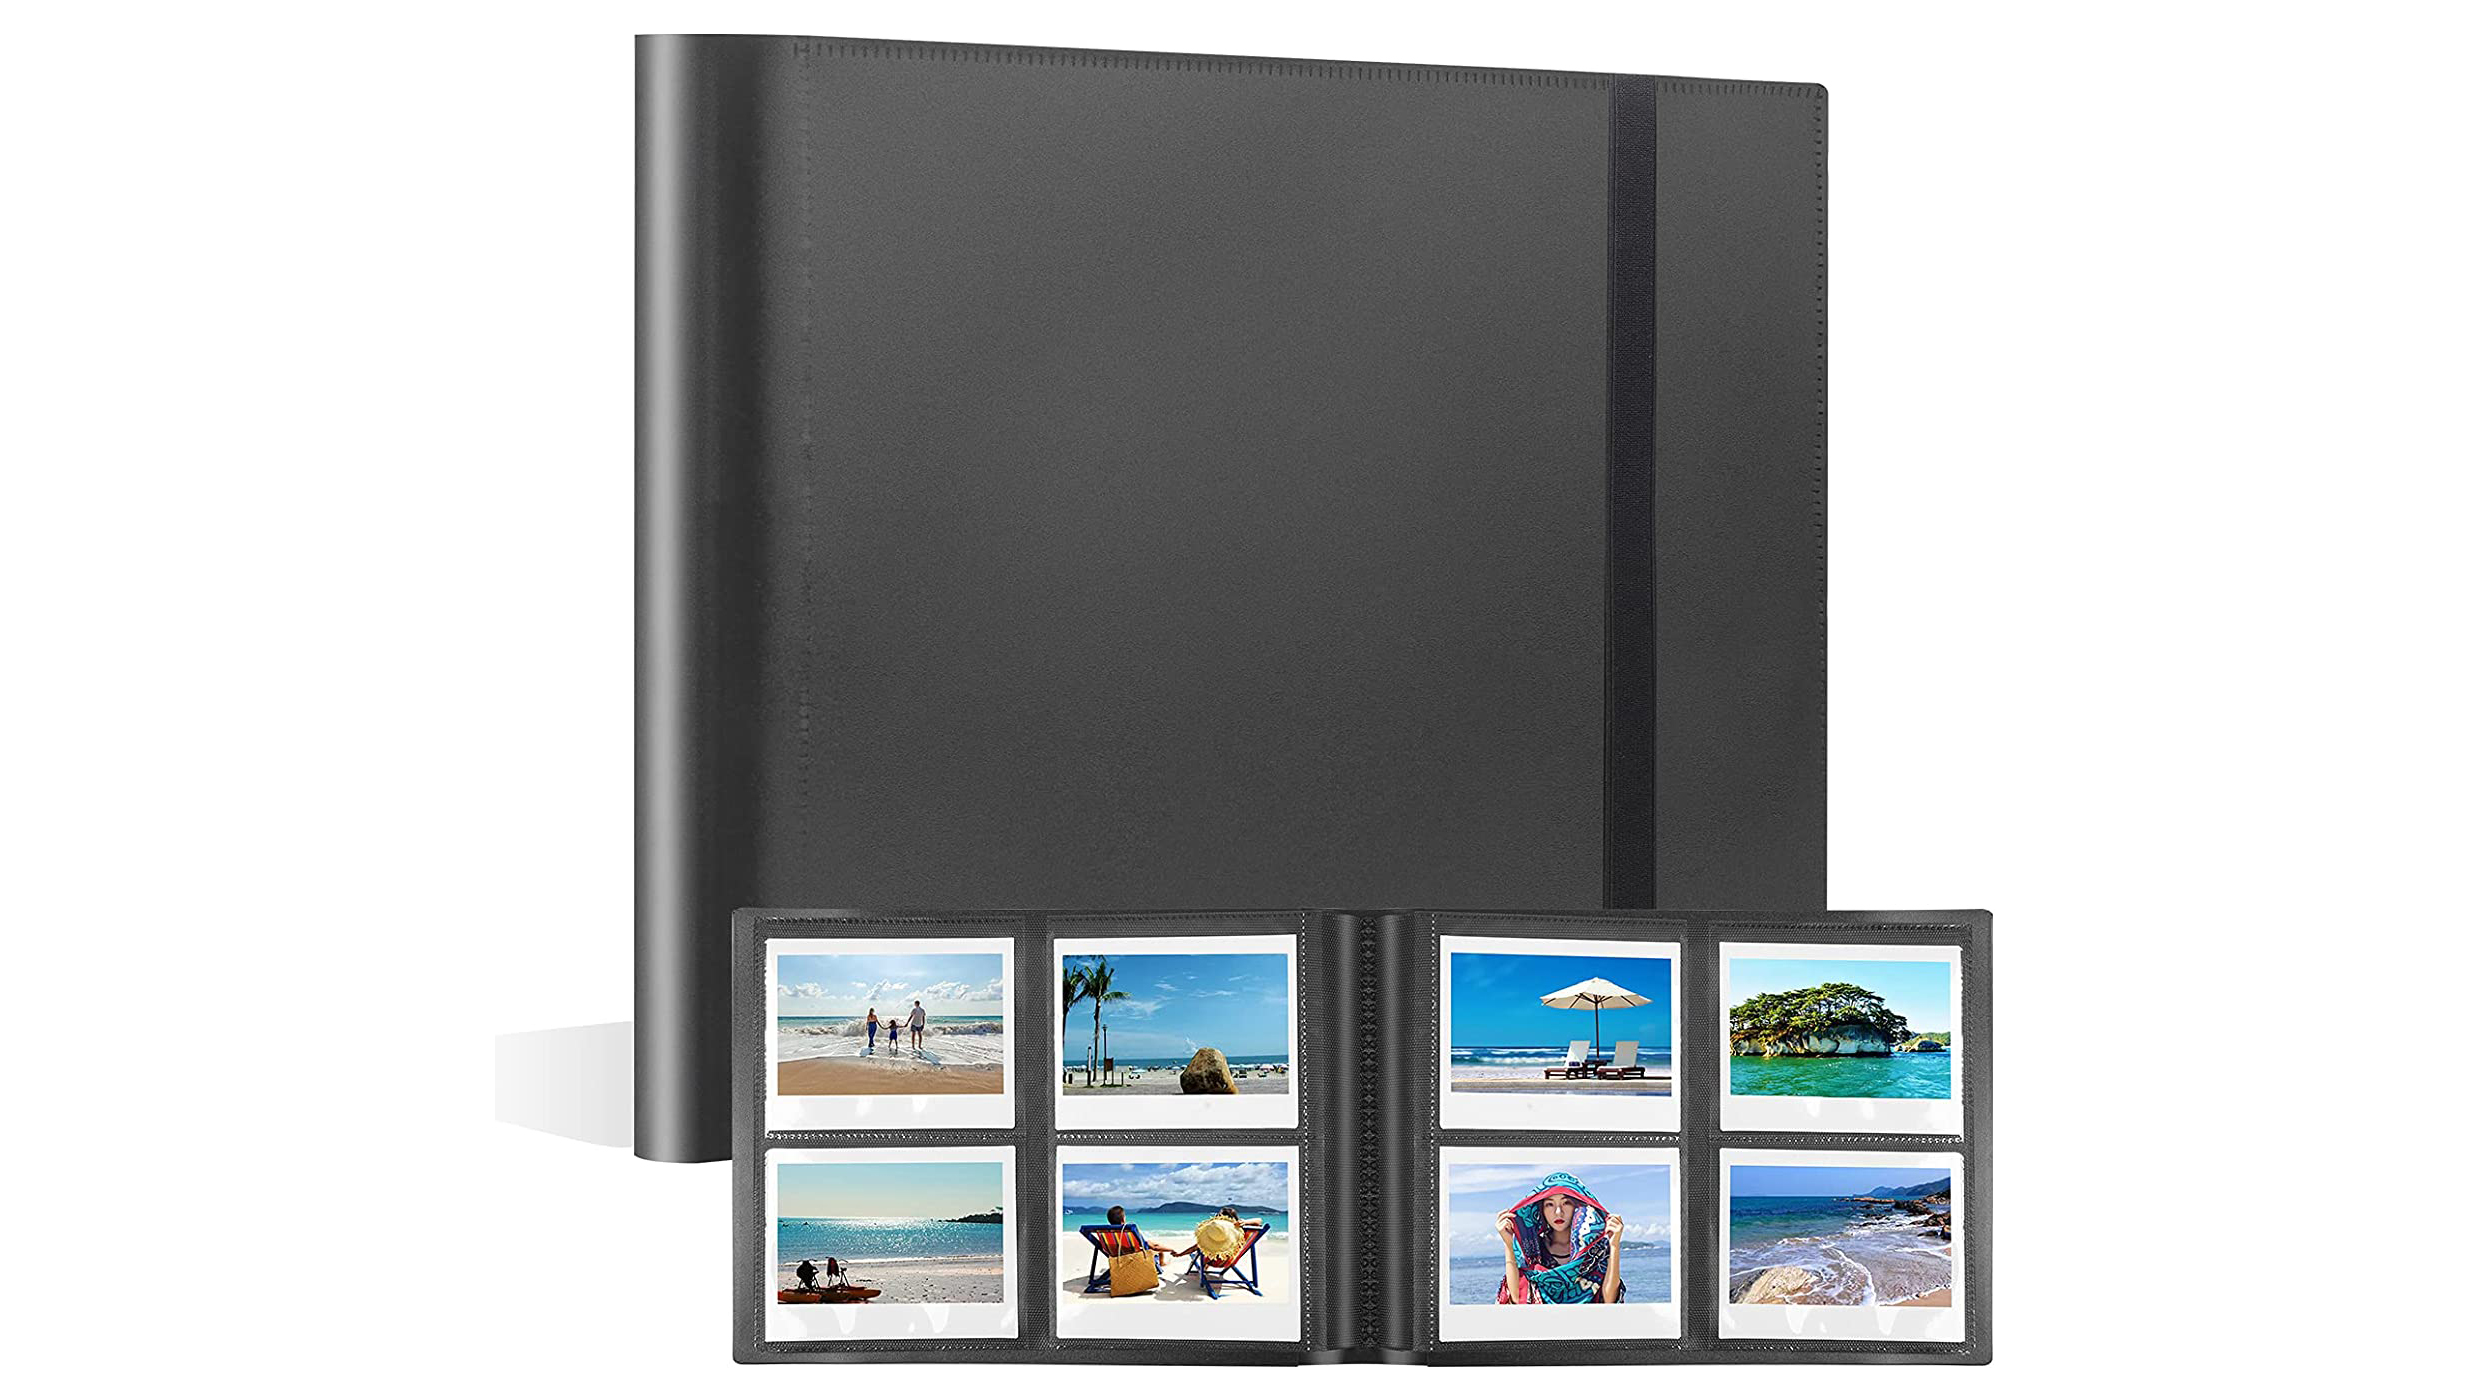 Instax Mini Photo Album Book 208 Pockets 2X3 Polaroid Photo Album